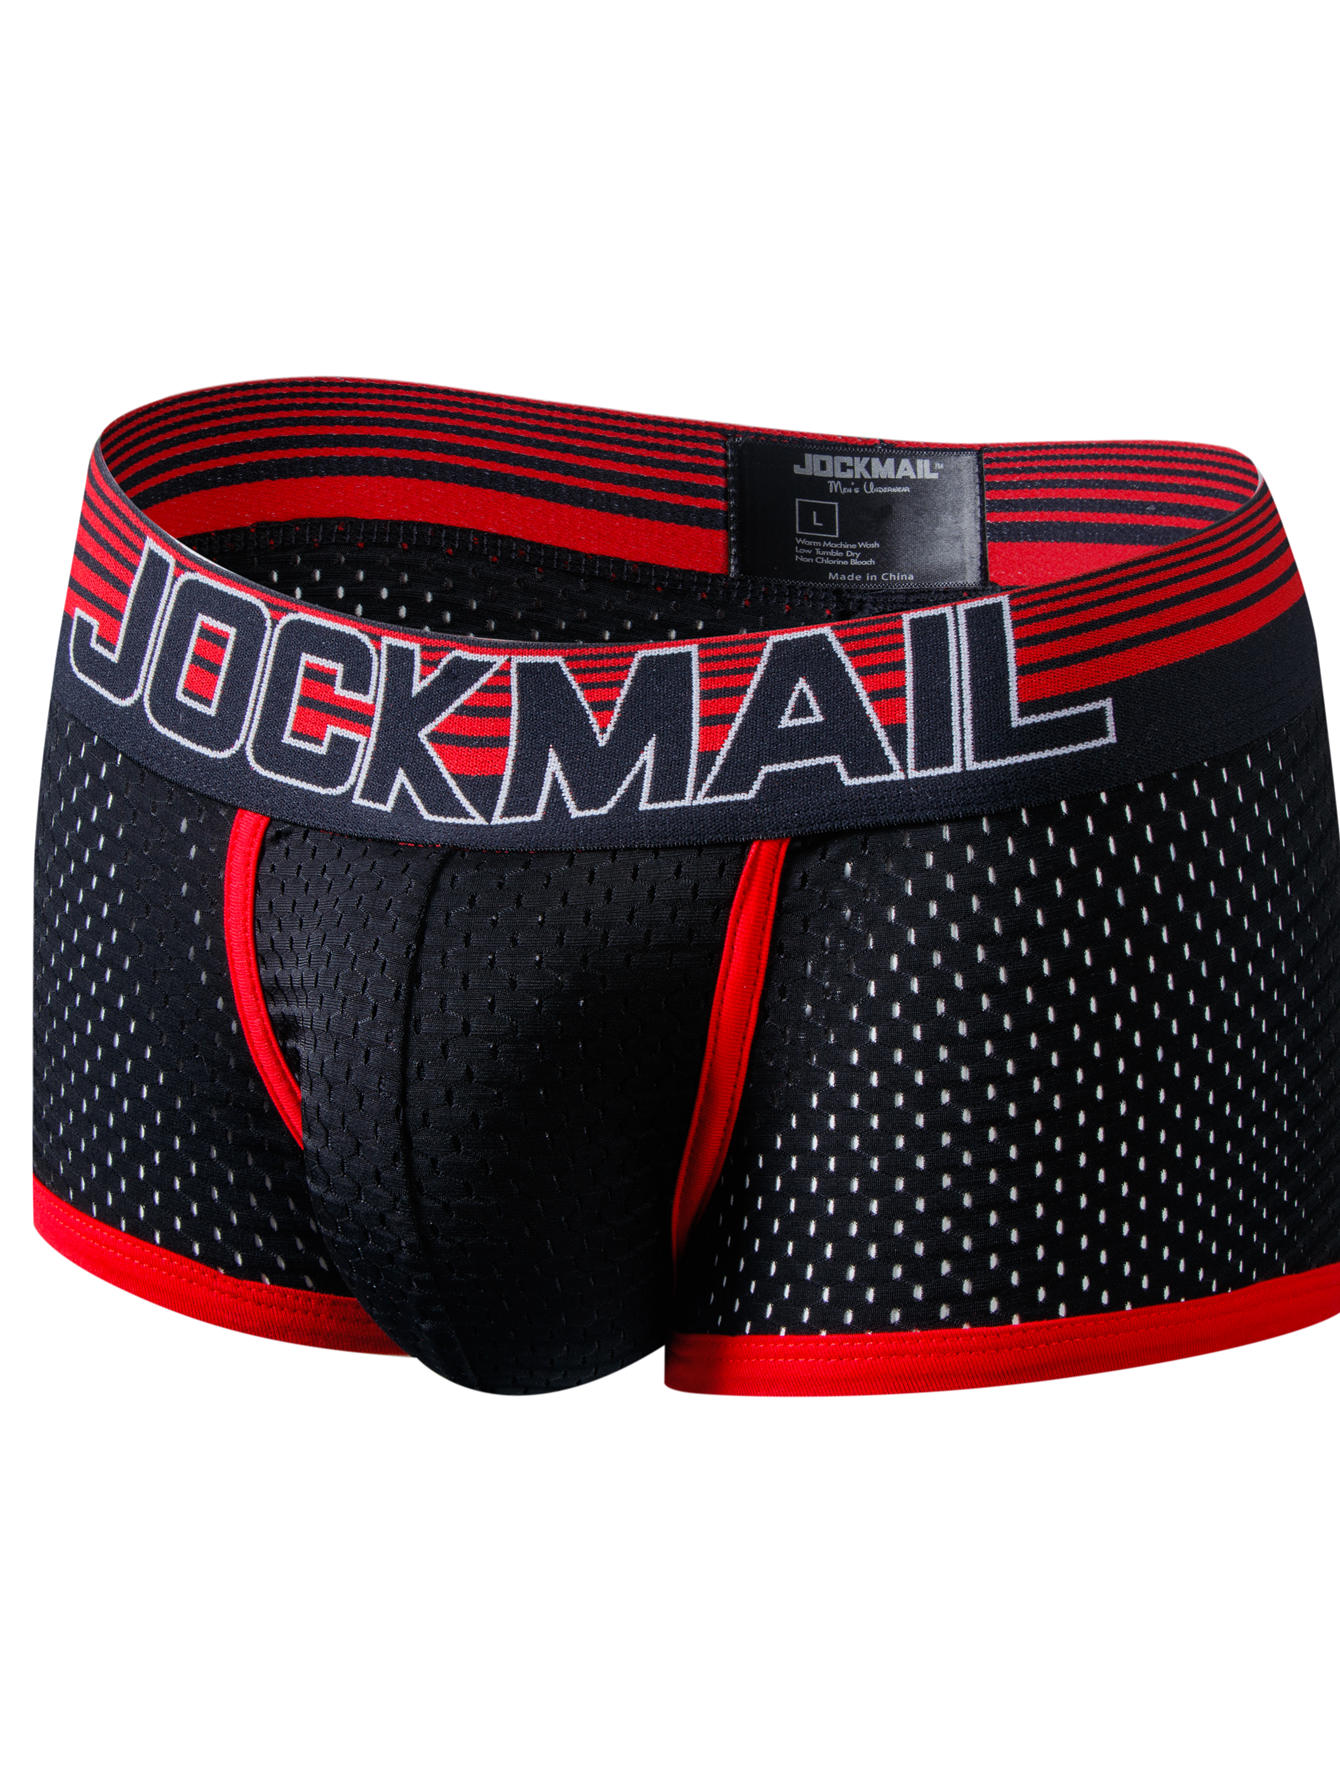 Seamless Men Underwear Nylon Material Boxer Brief - China Clothing